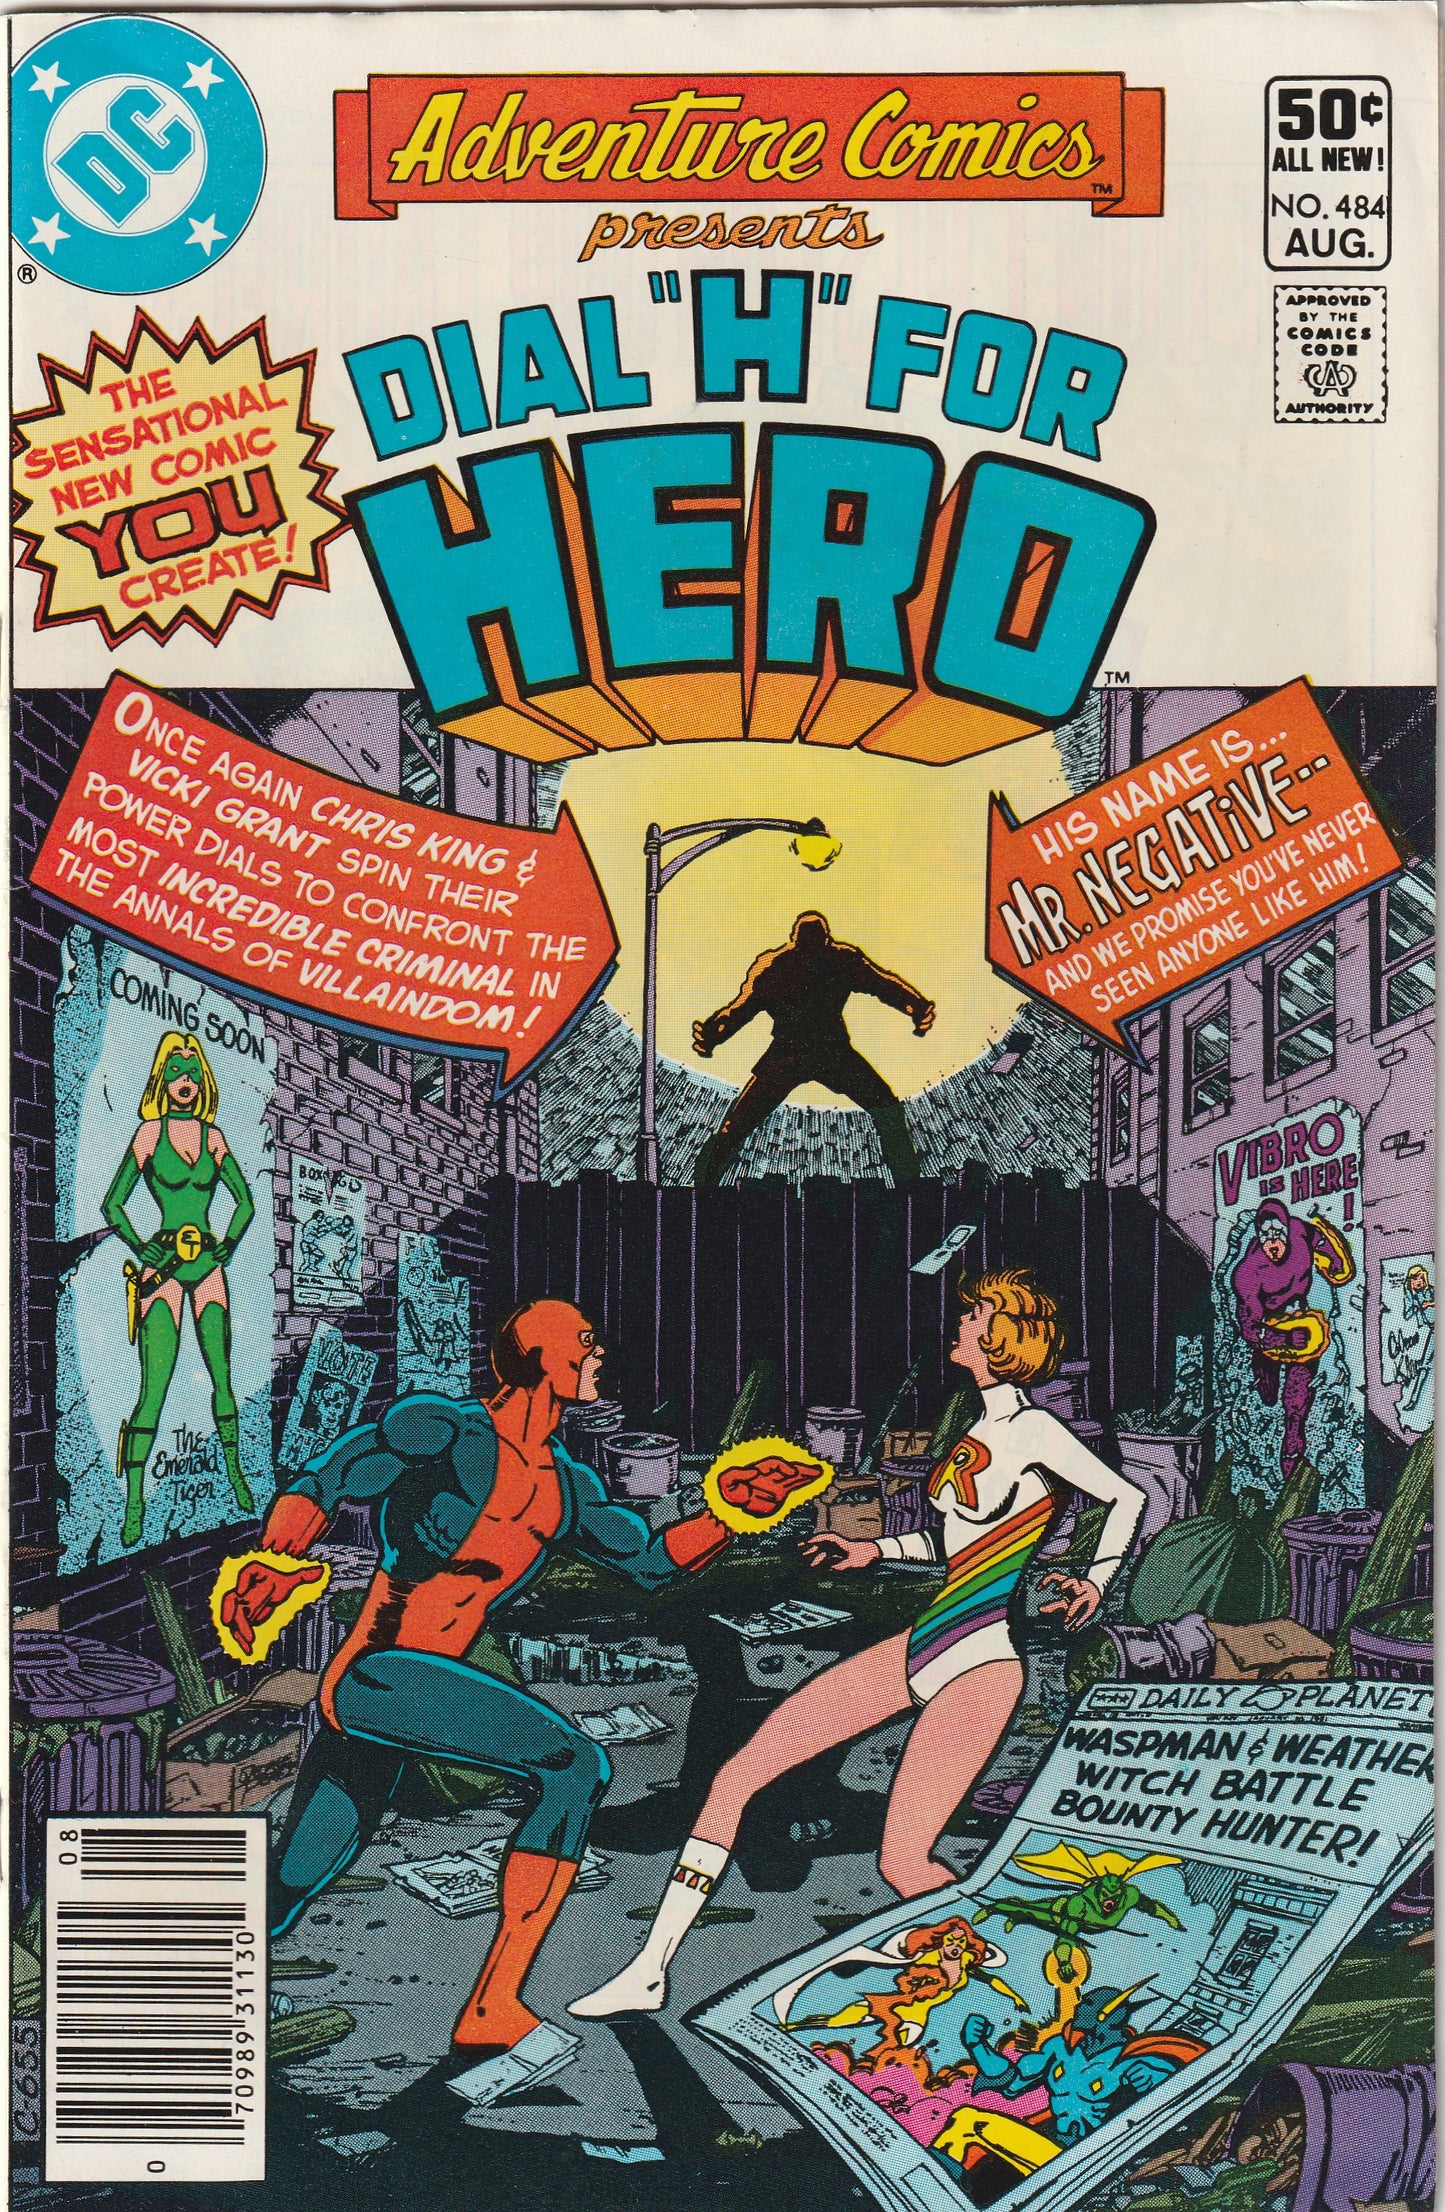 Adventure Comics #484 (1981) - Starring Dial H For Hero